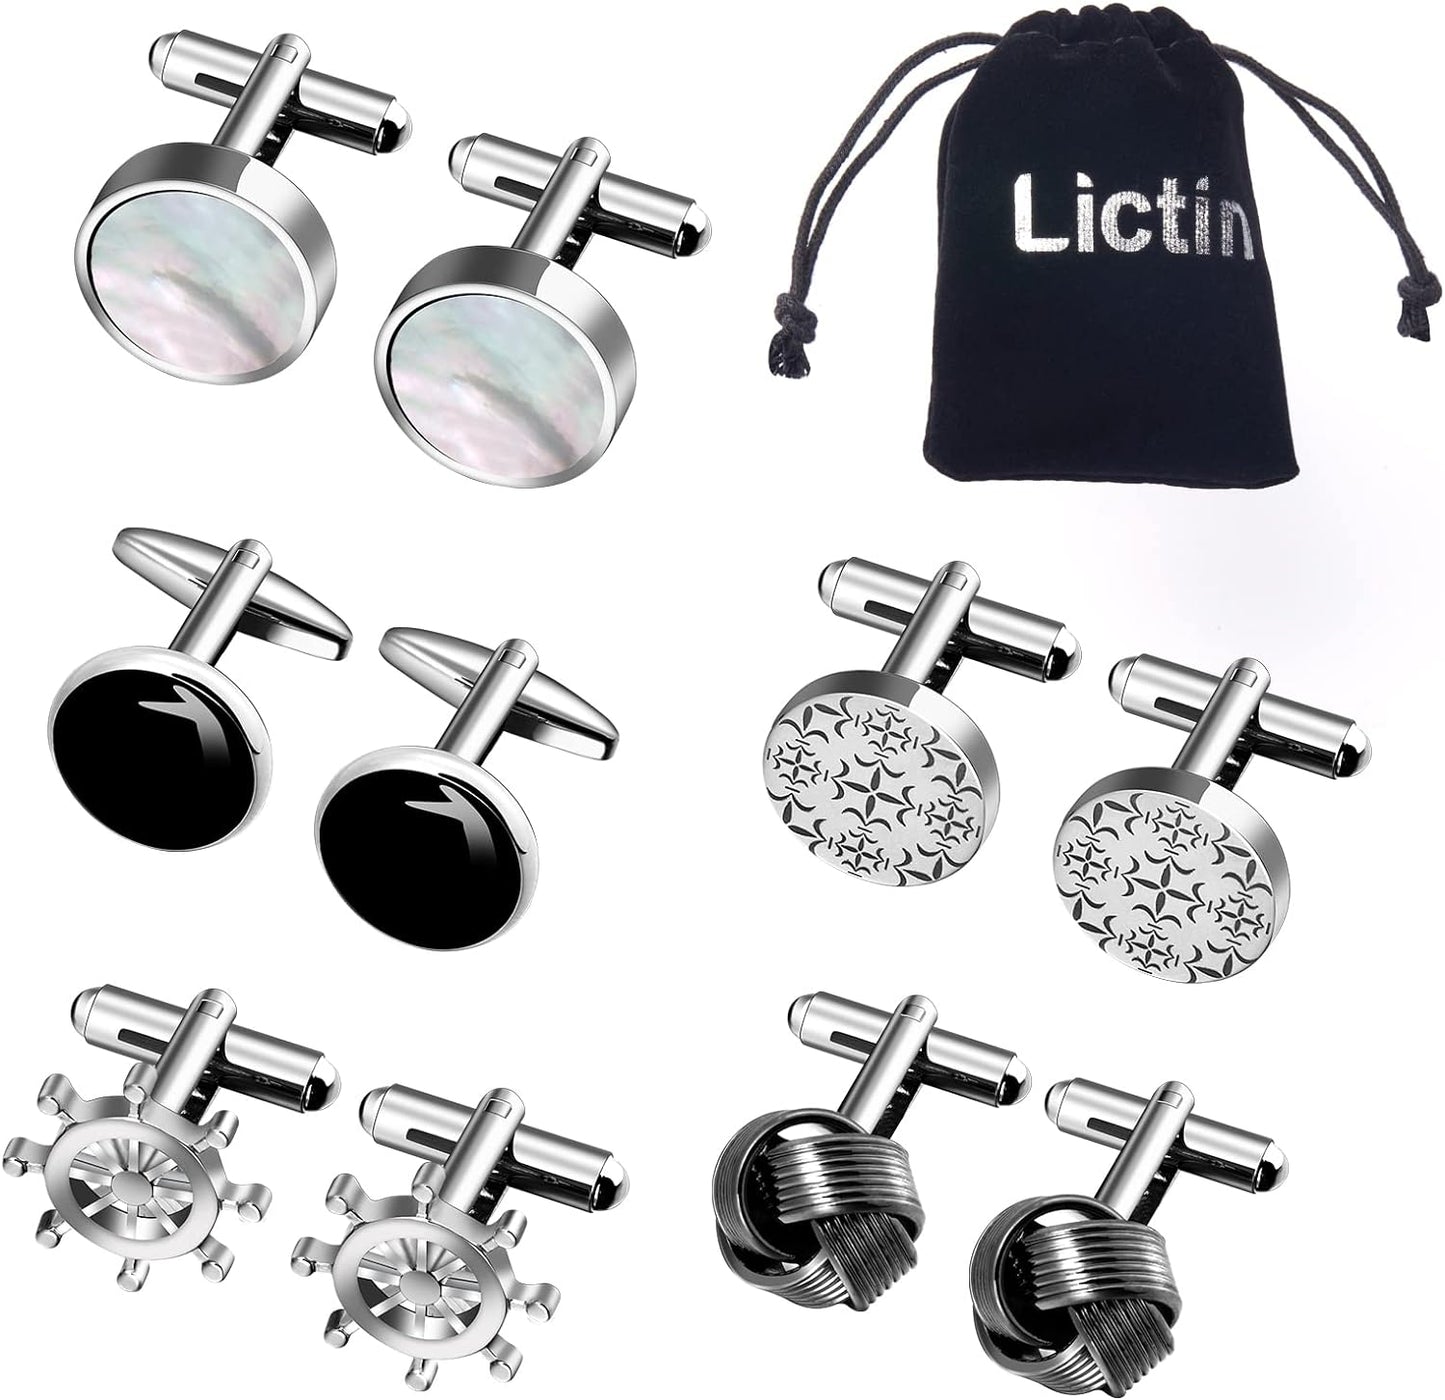 Lictin Men's Cufflinks Cuff Links for Men, Stainless Steel Tuxedo Shirt Cuff Links Set, Men’s Jewelry or Accessories for Business, Wedding